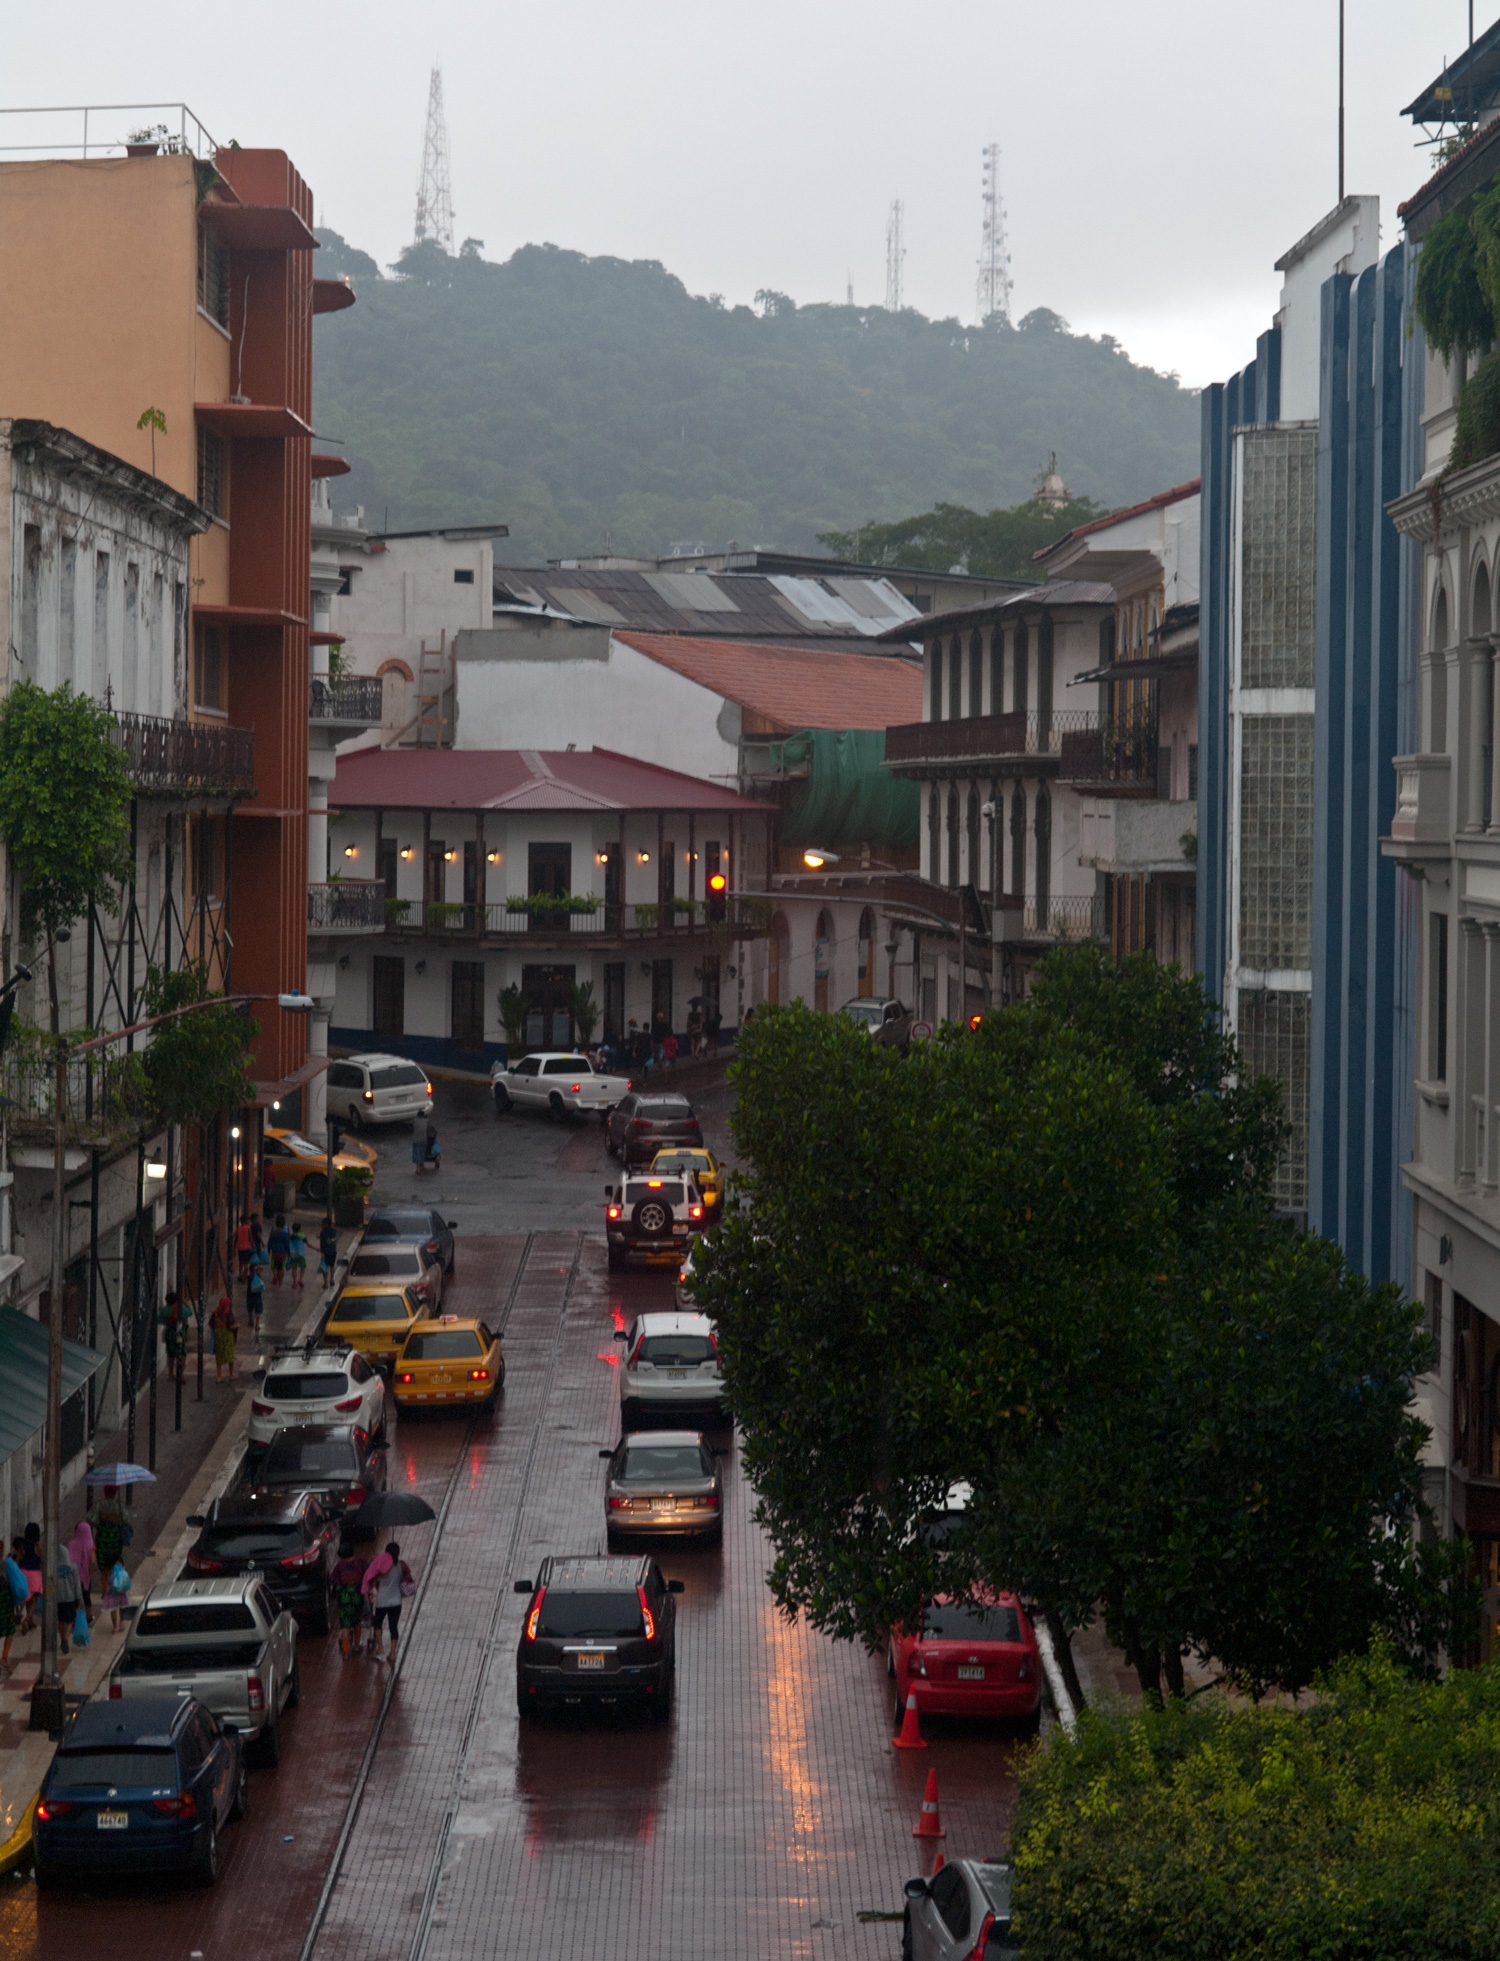 Downtown Casco Viejo